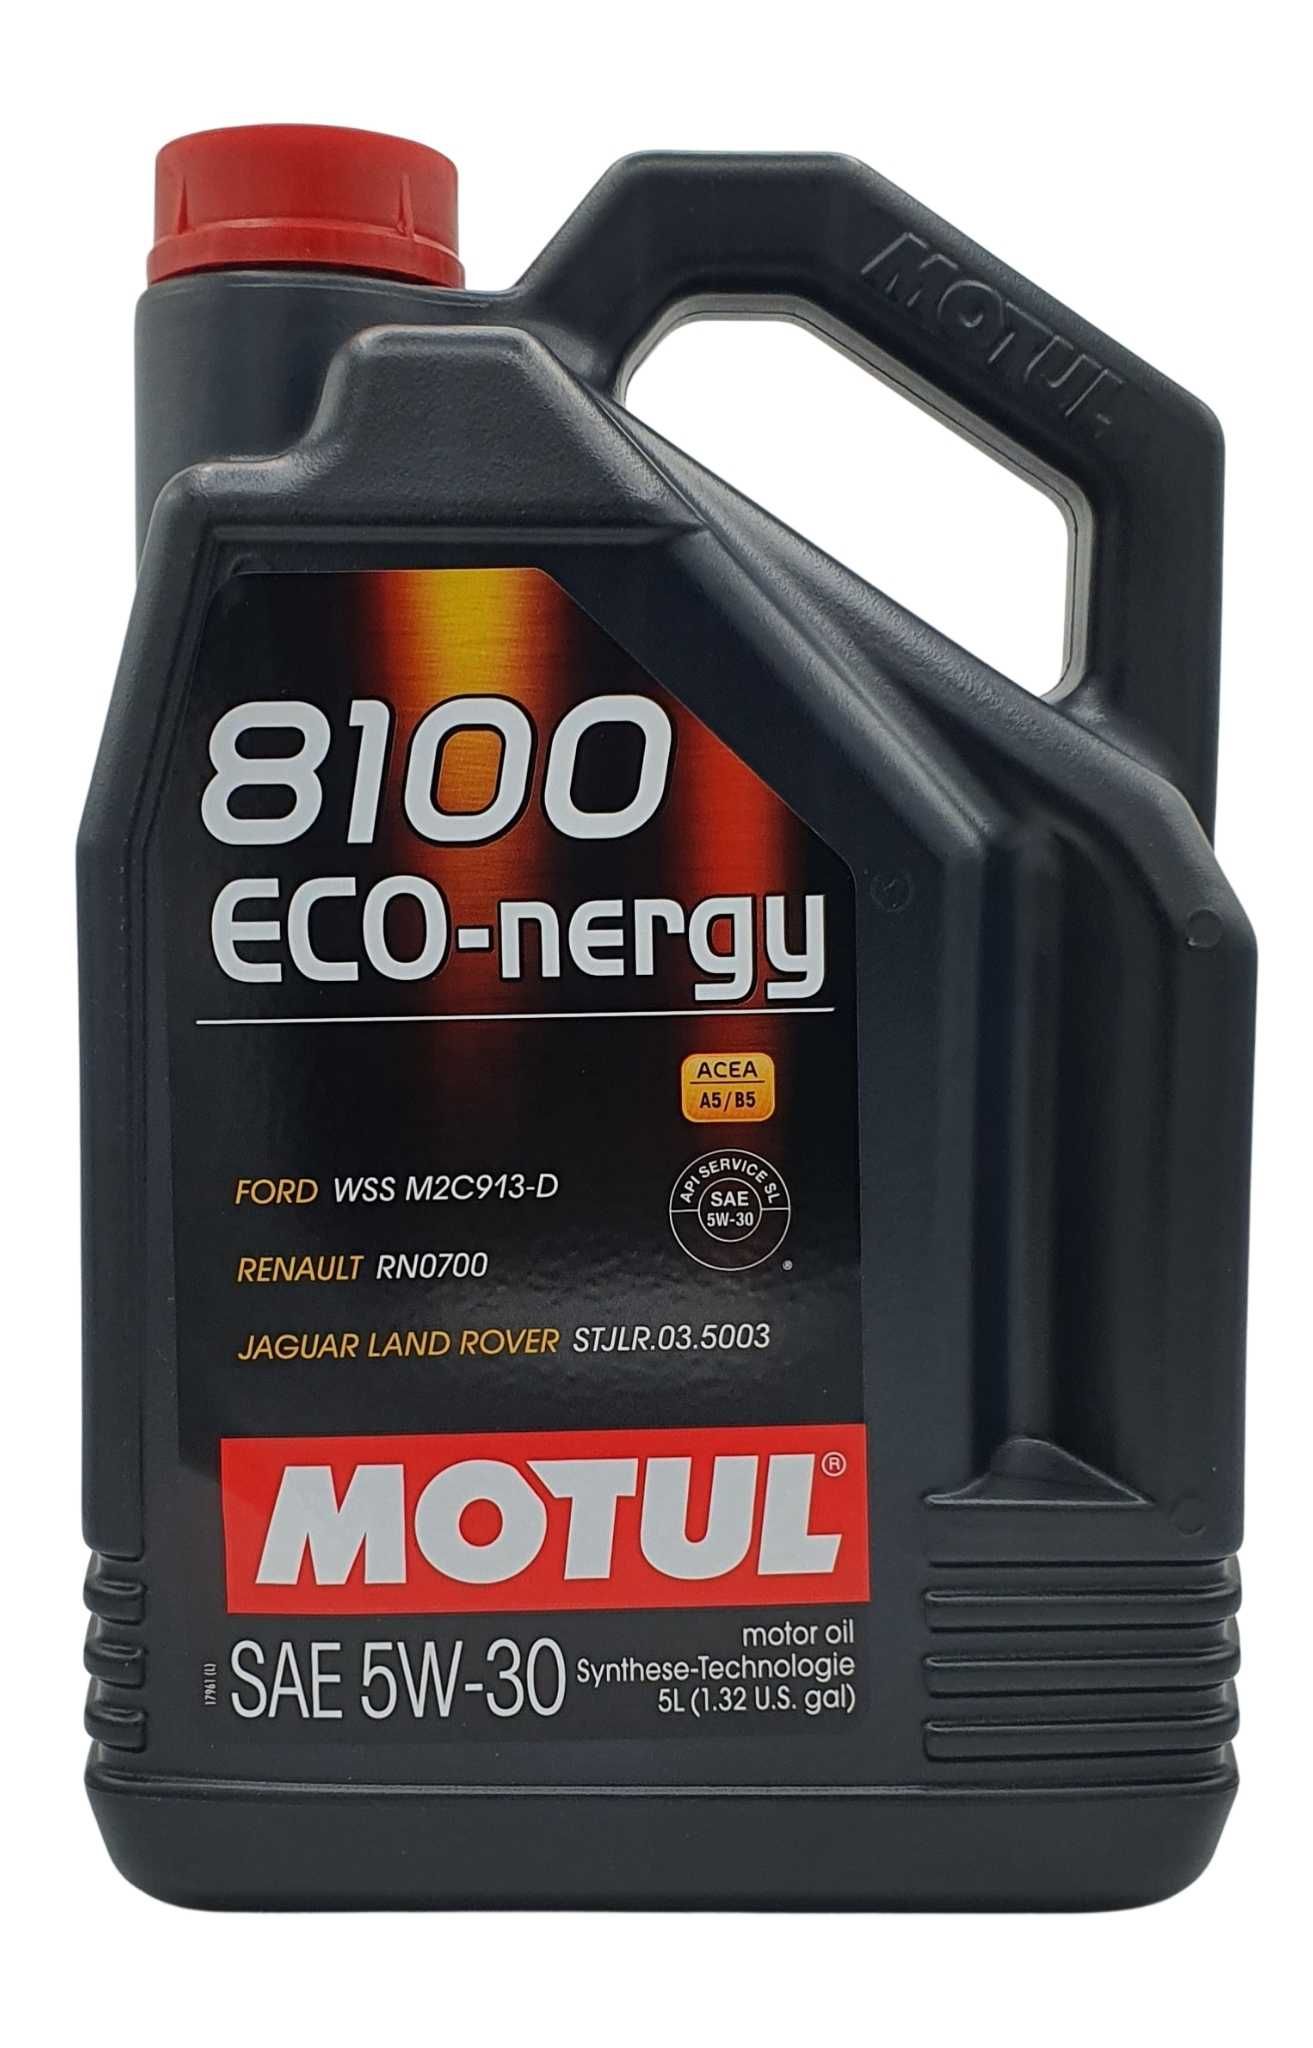 Motul 8100 Eco-nergy 5W-30 5 Liter